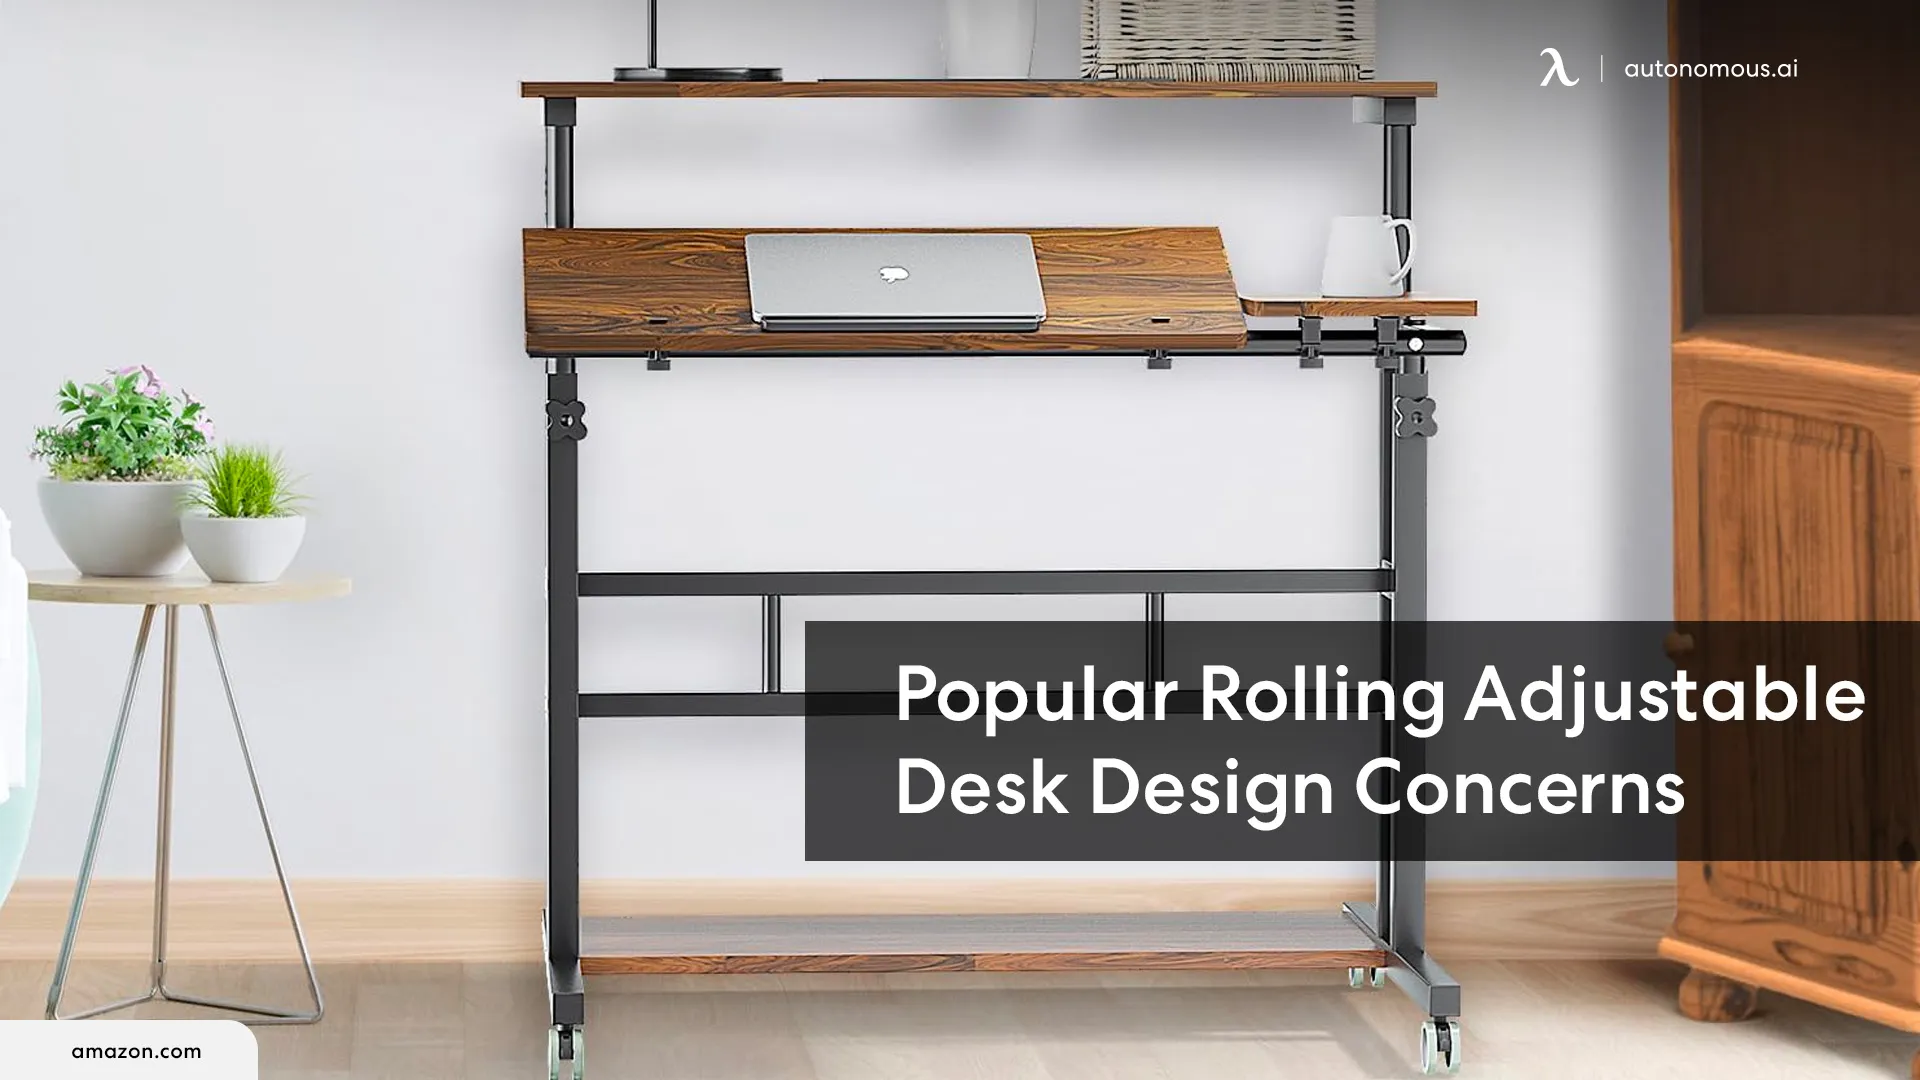 Addressing Common Concerns with Rolling Adjustable Desk Designs